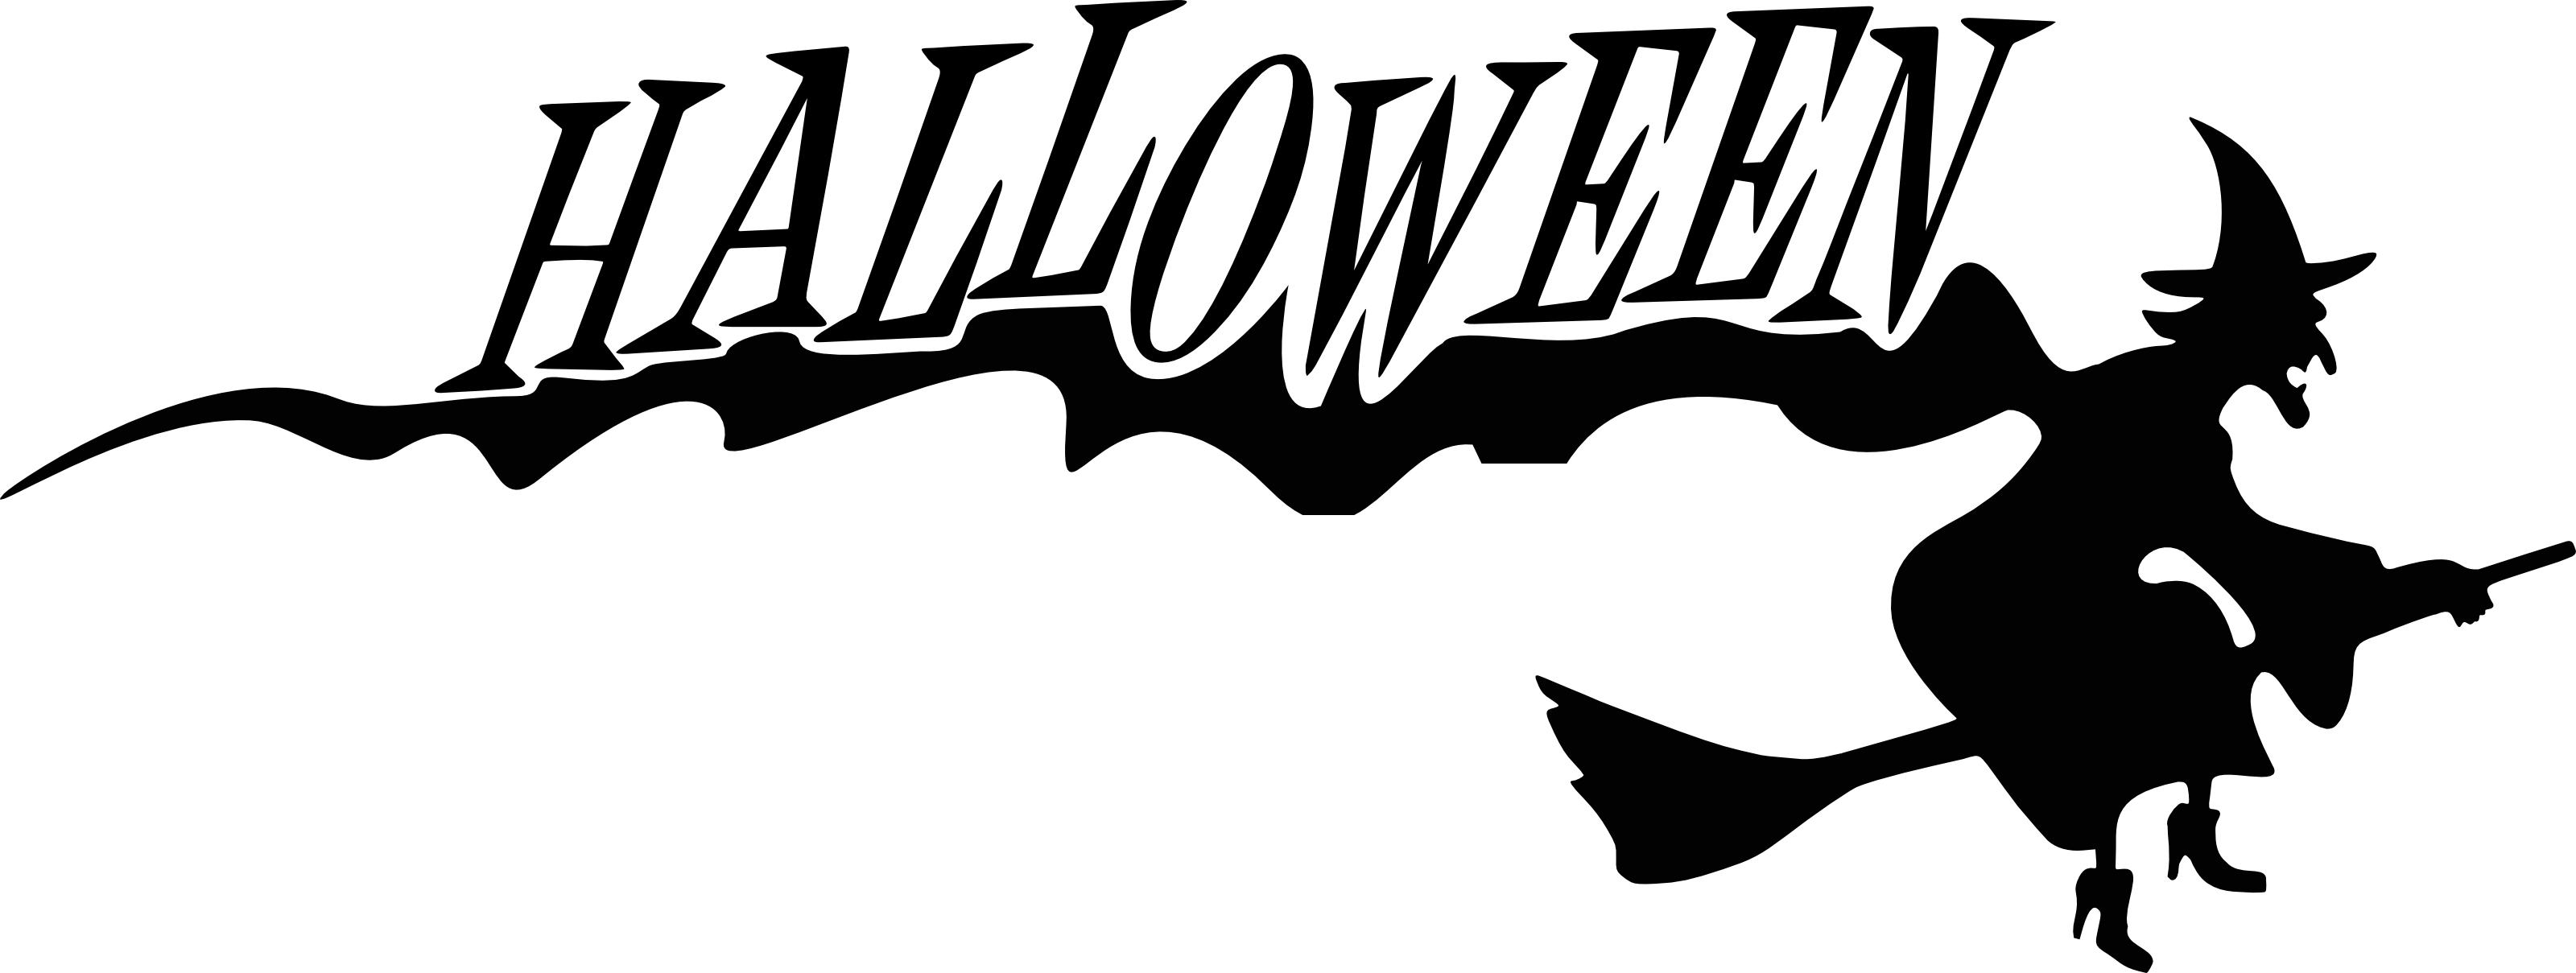 halloween logo clip art - photo #6